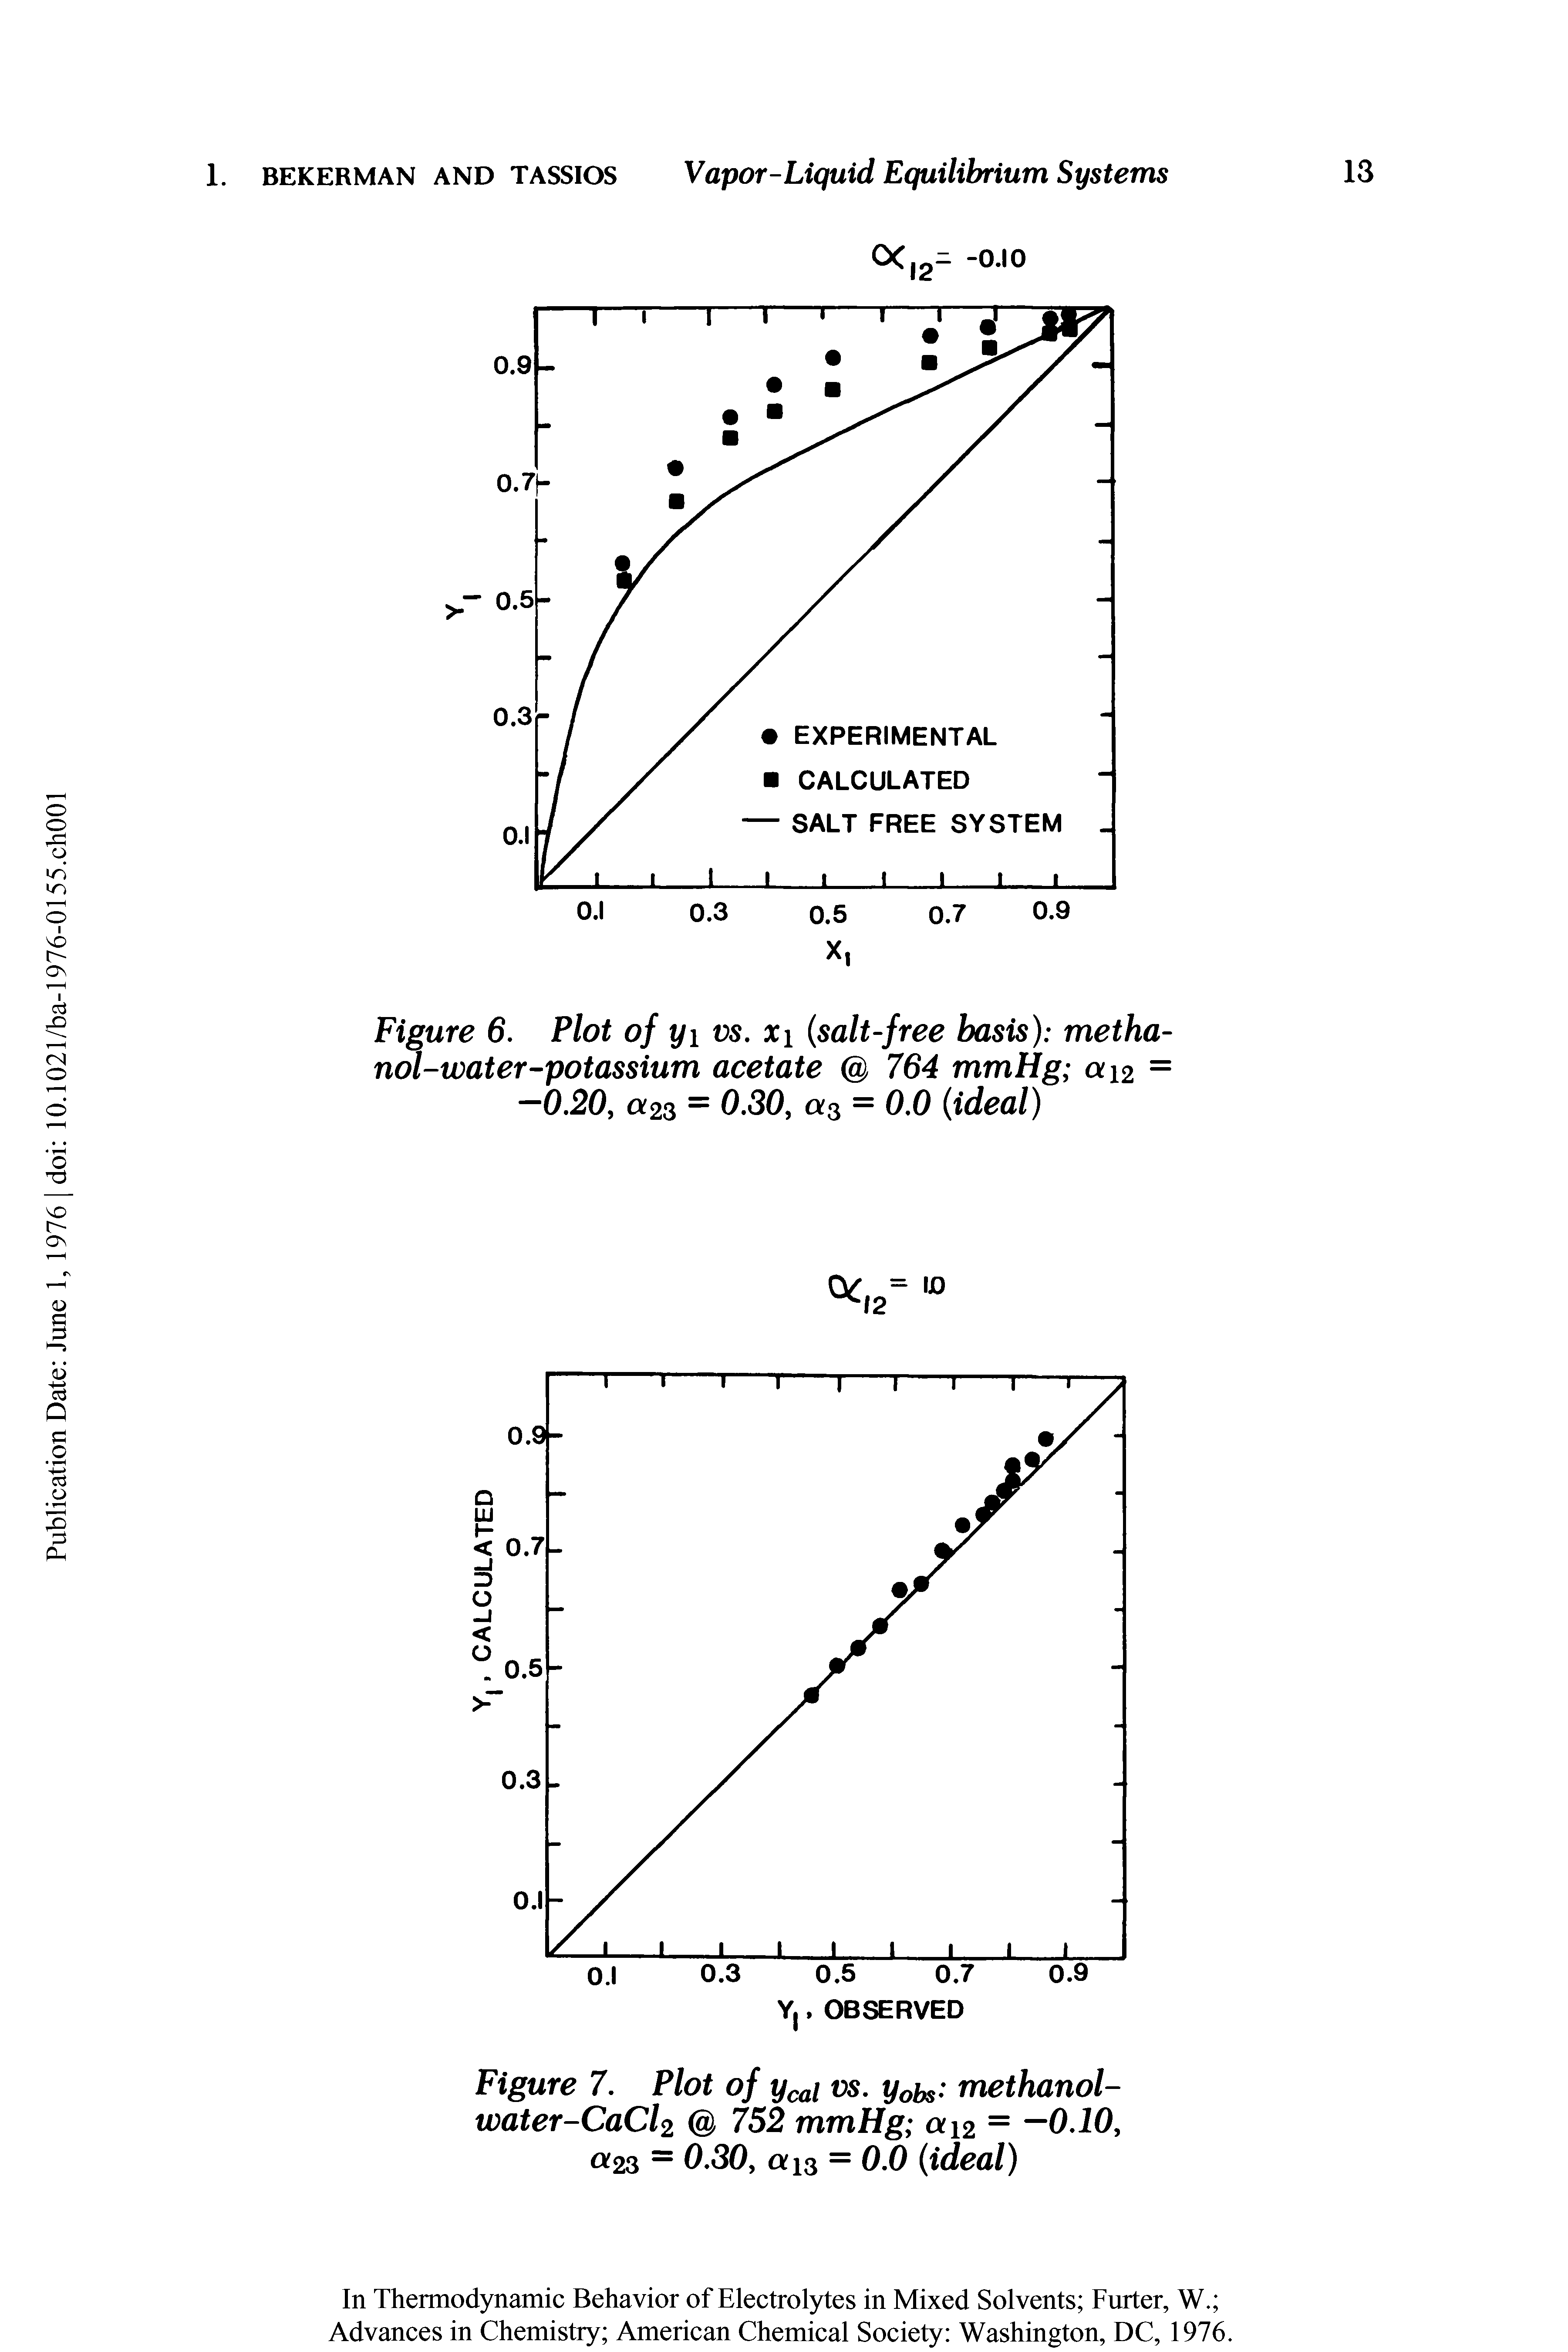 Figure 6. Plot of y vs. x (salt-free basis) methanol-water-potassium acetate 764 mmHg a 12 = —0.20, a 23 = 0.30, a 3 = 0.0 (ideal)...